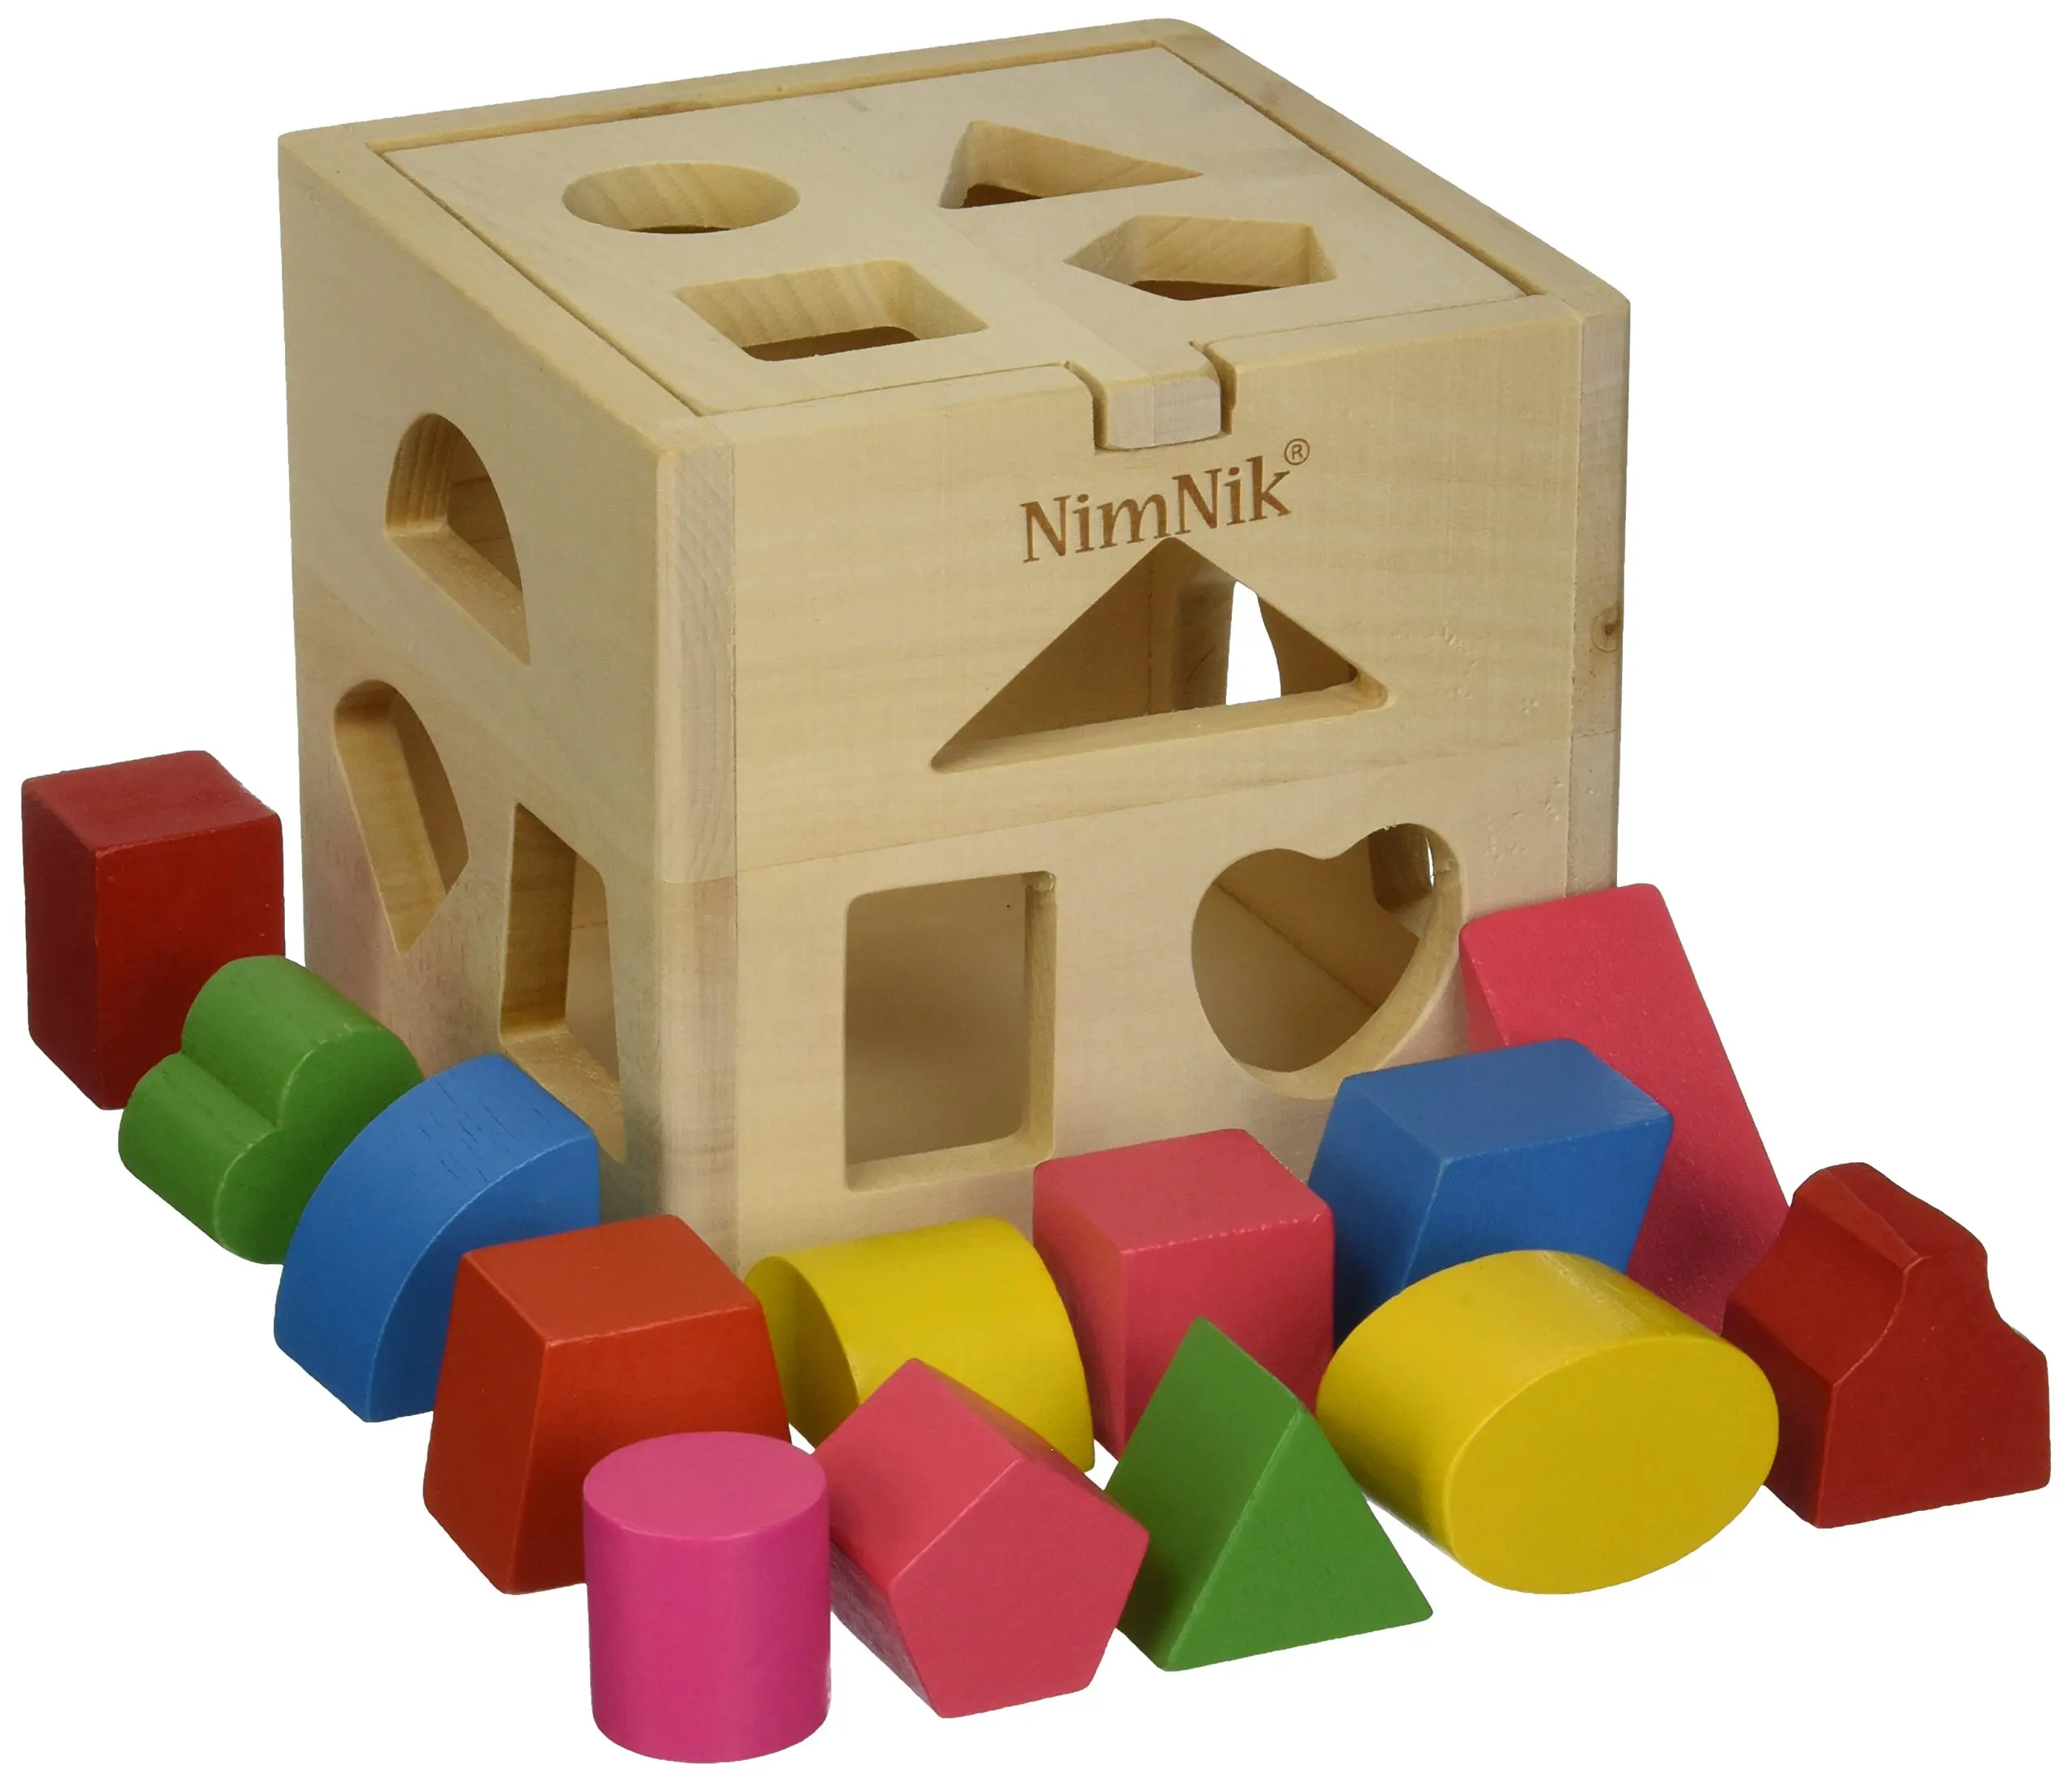 wooden shape sorter cube